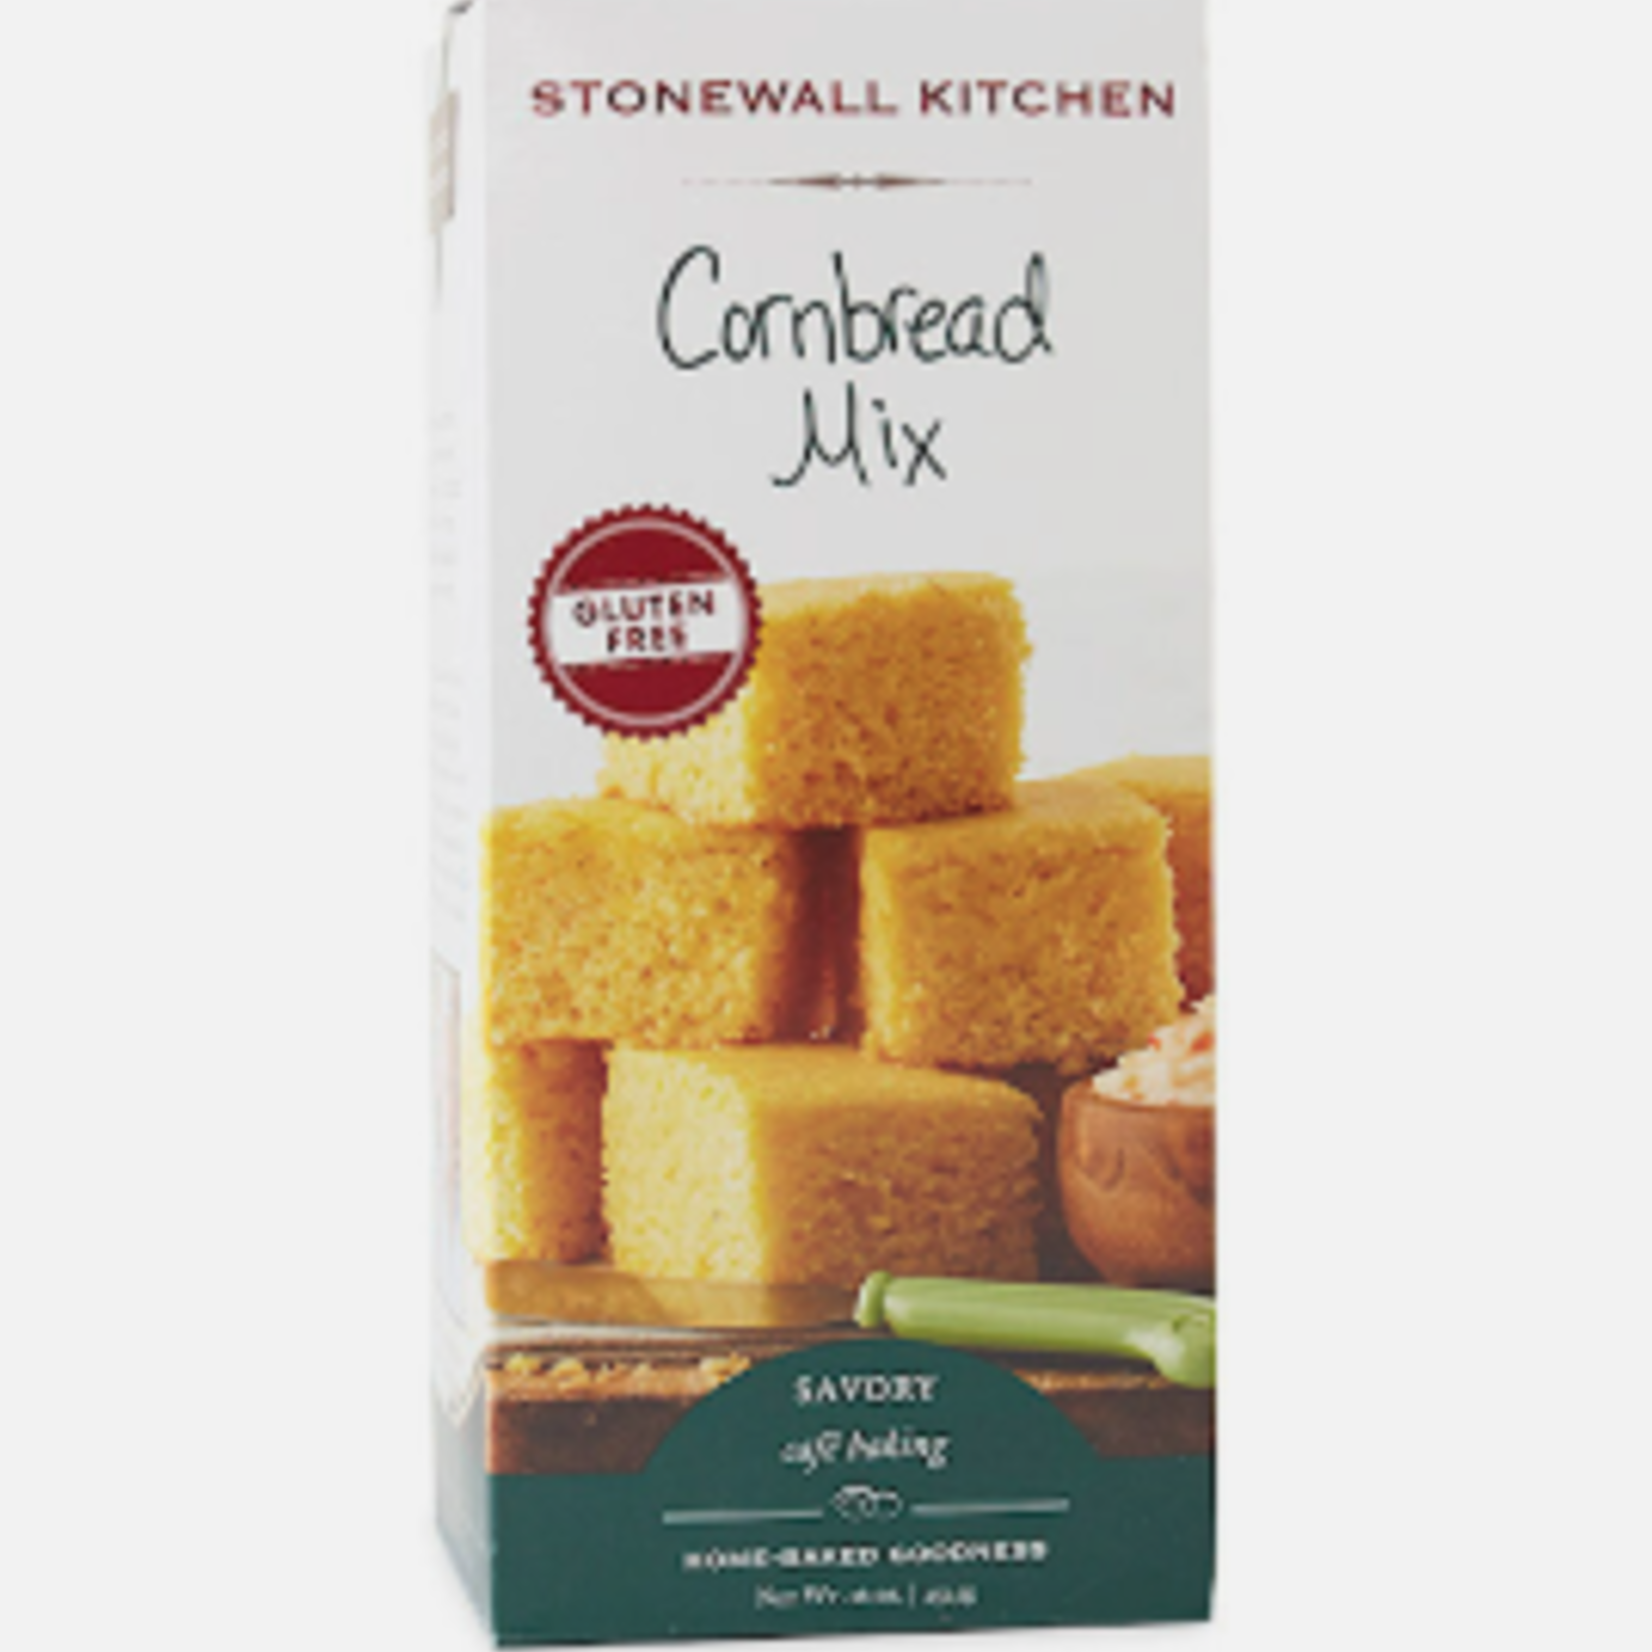 Stonewall Kitchen Cornbread Mix - Gluten Free